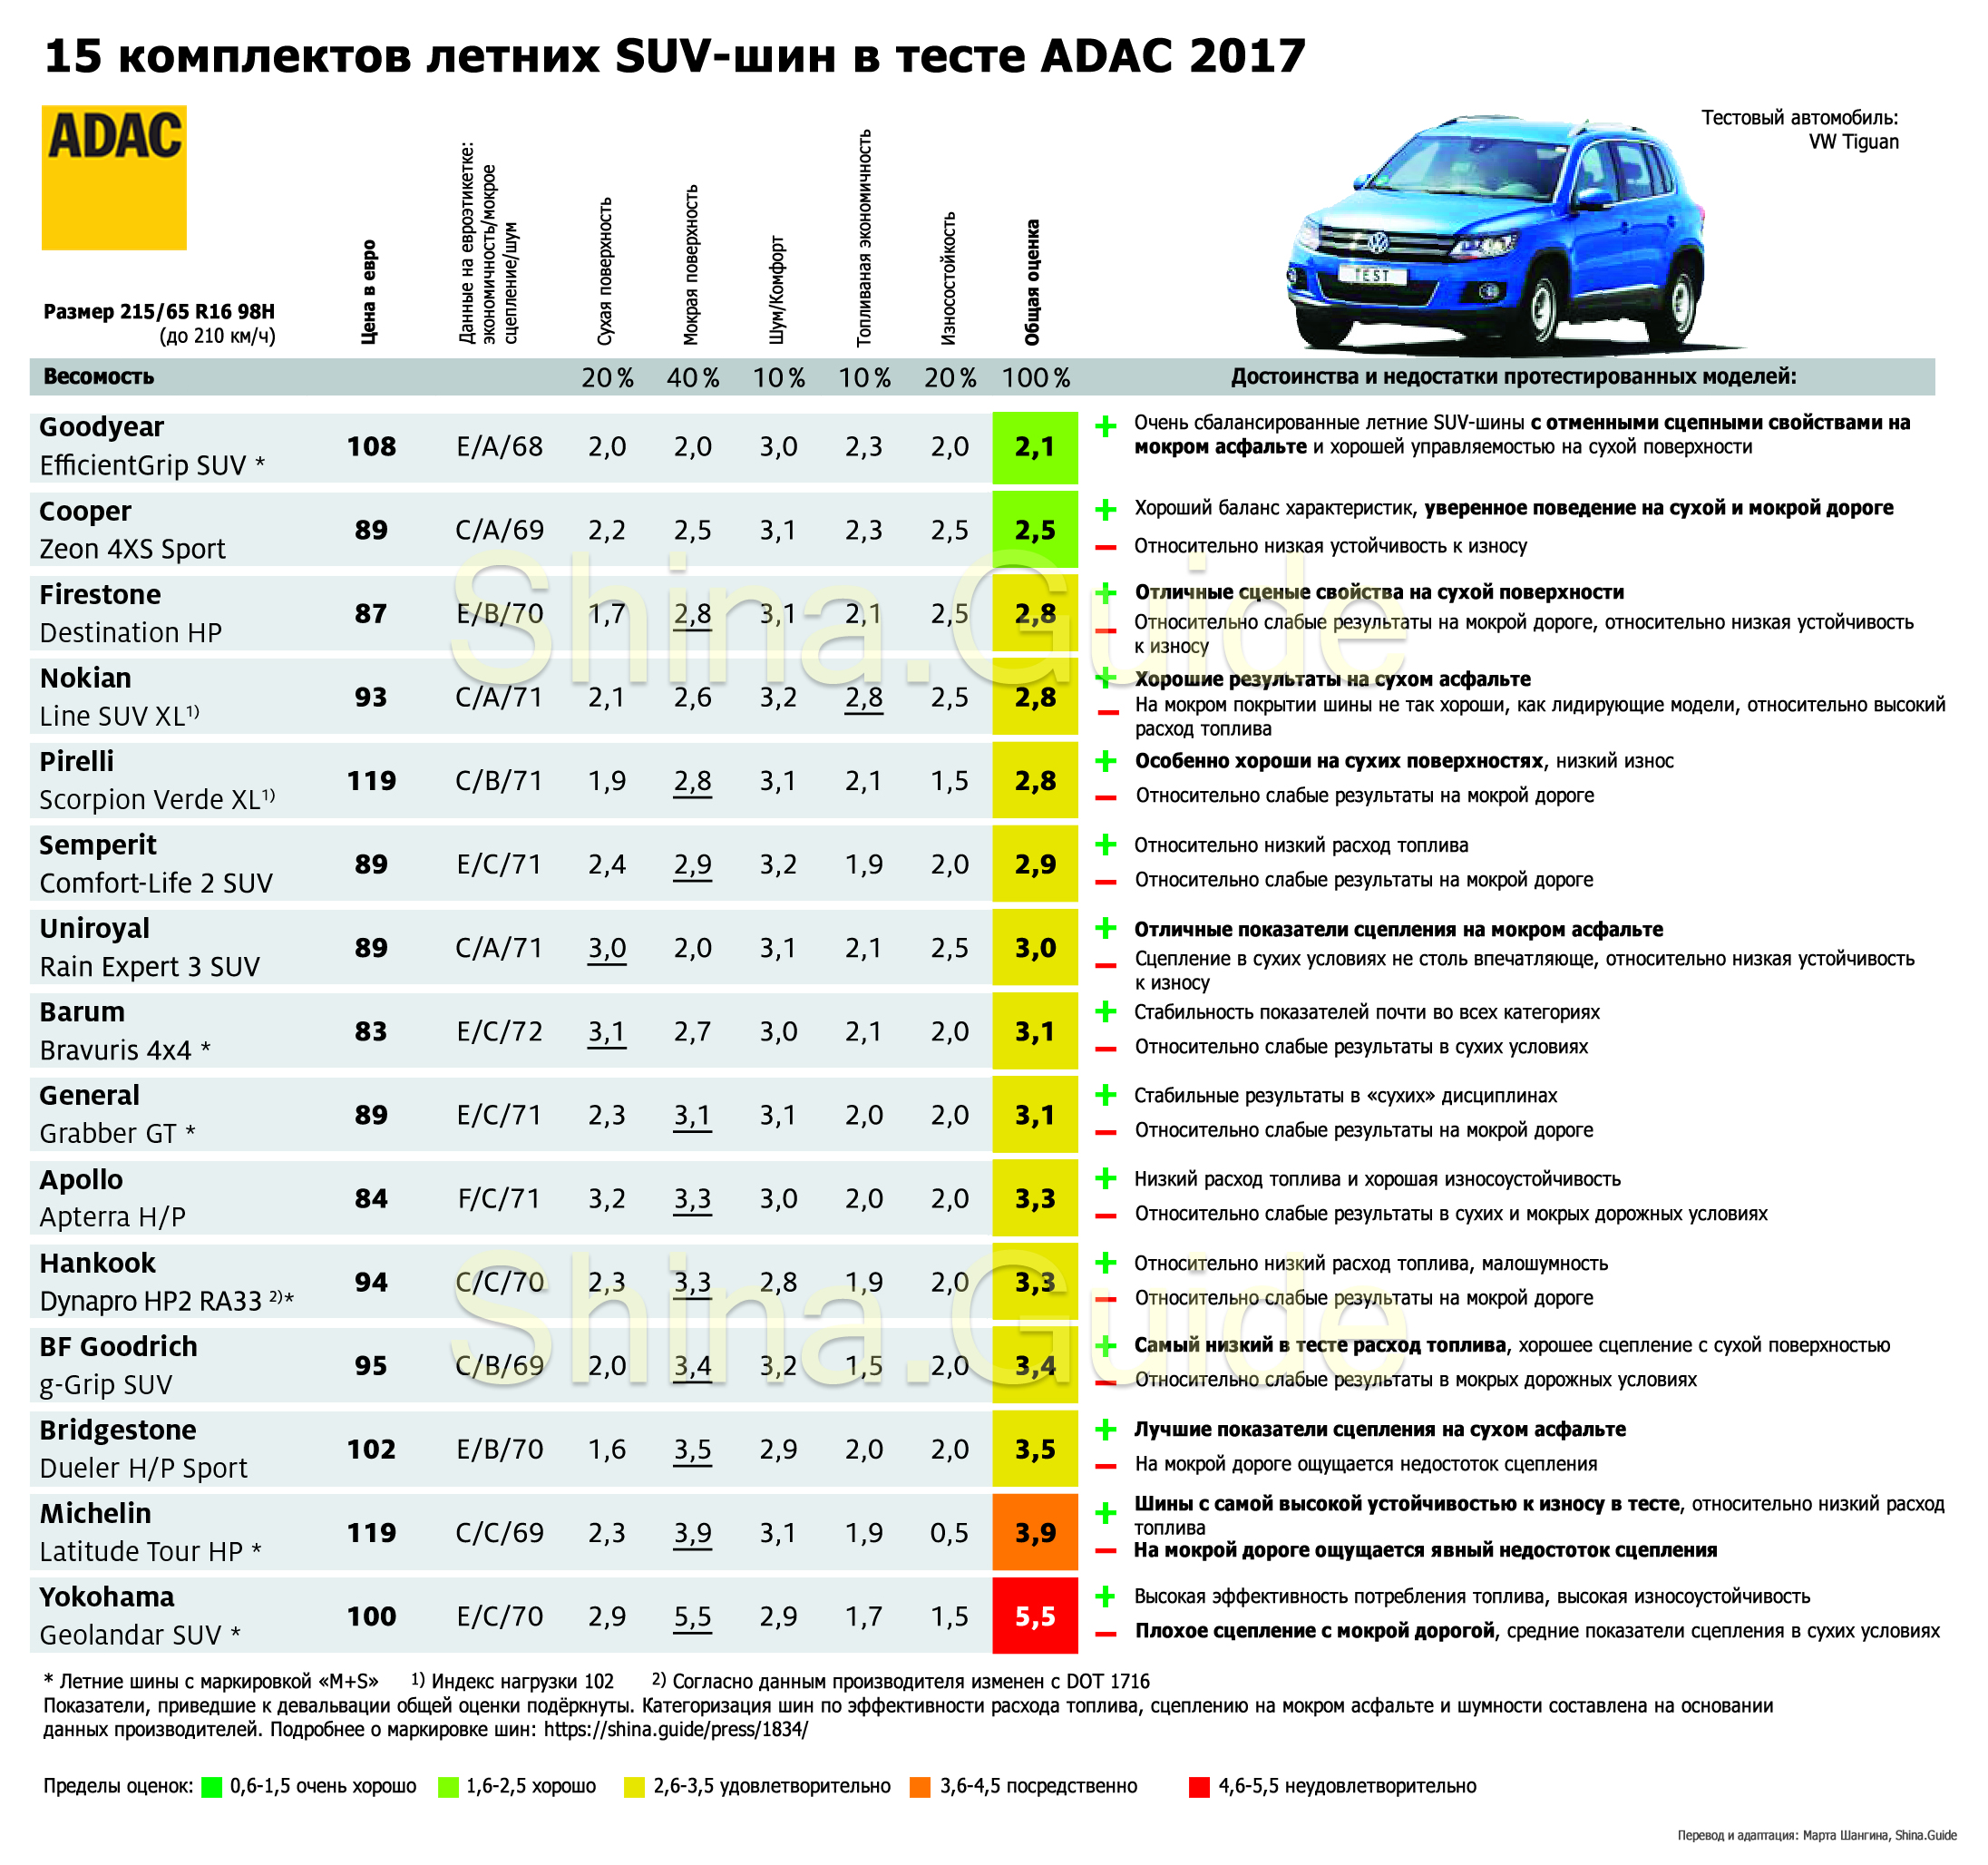 Результаты теста летних SUV-шин ADAC 2017